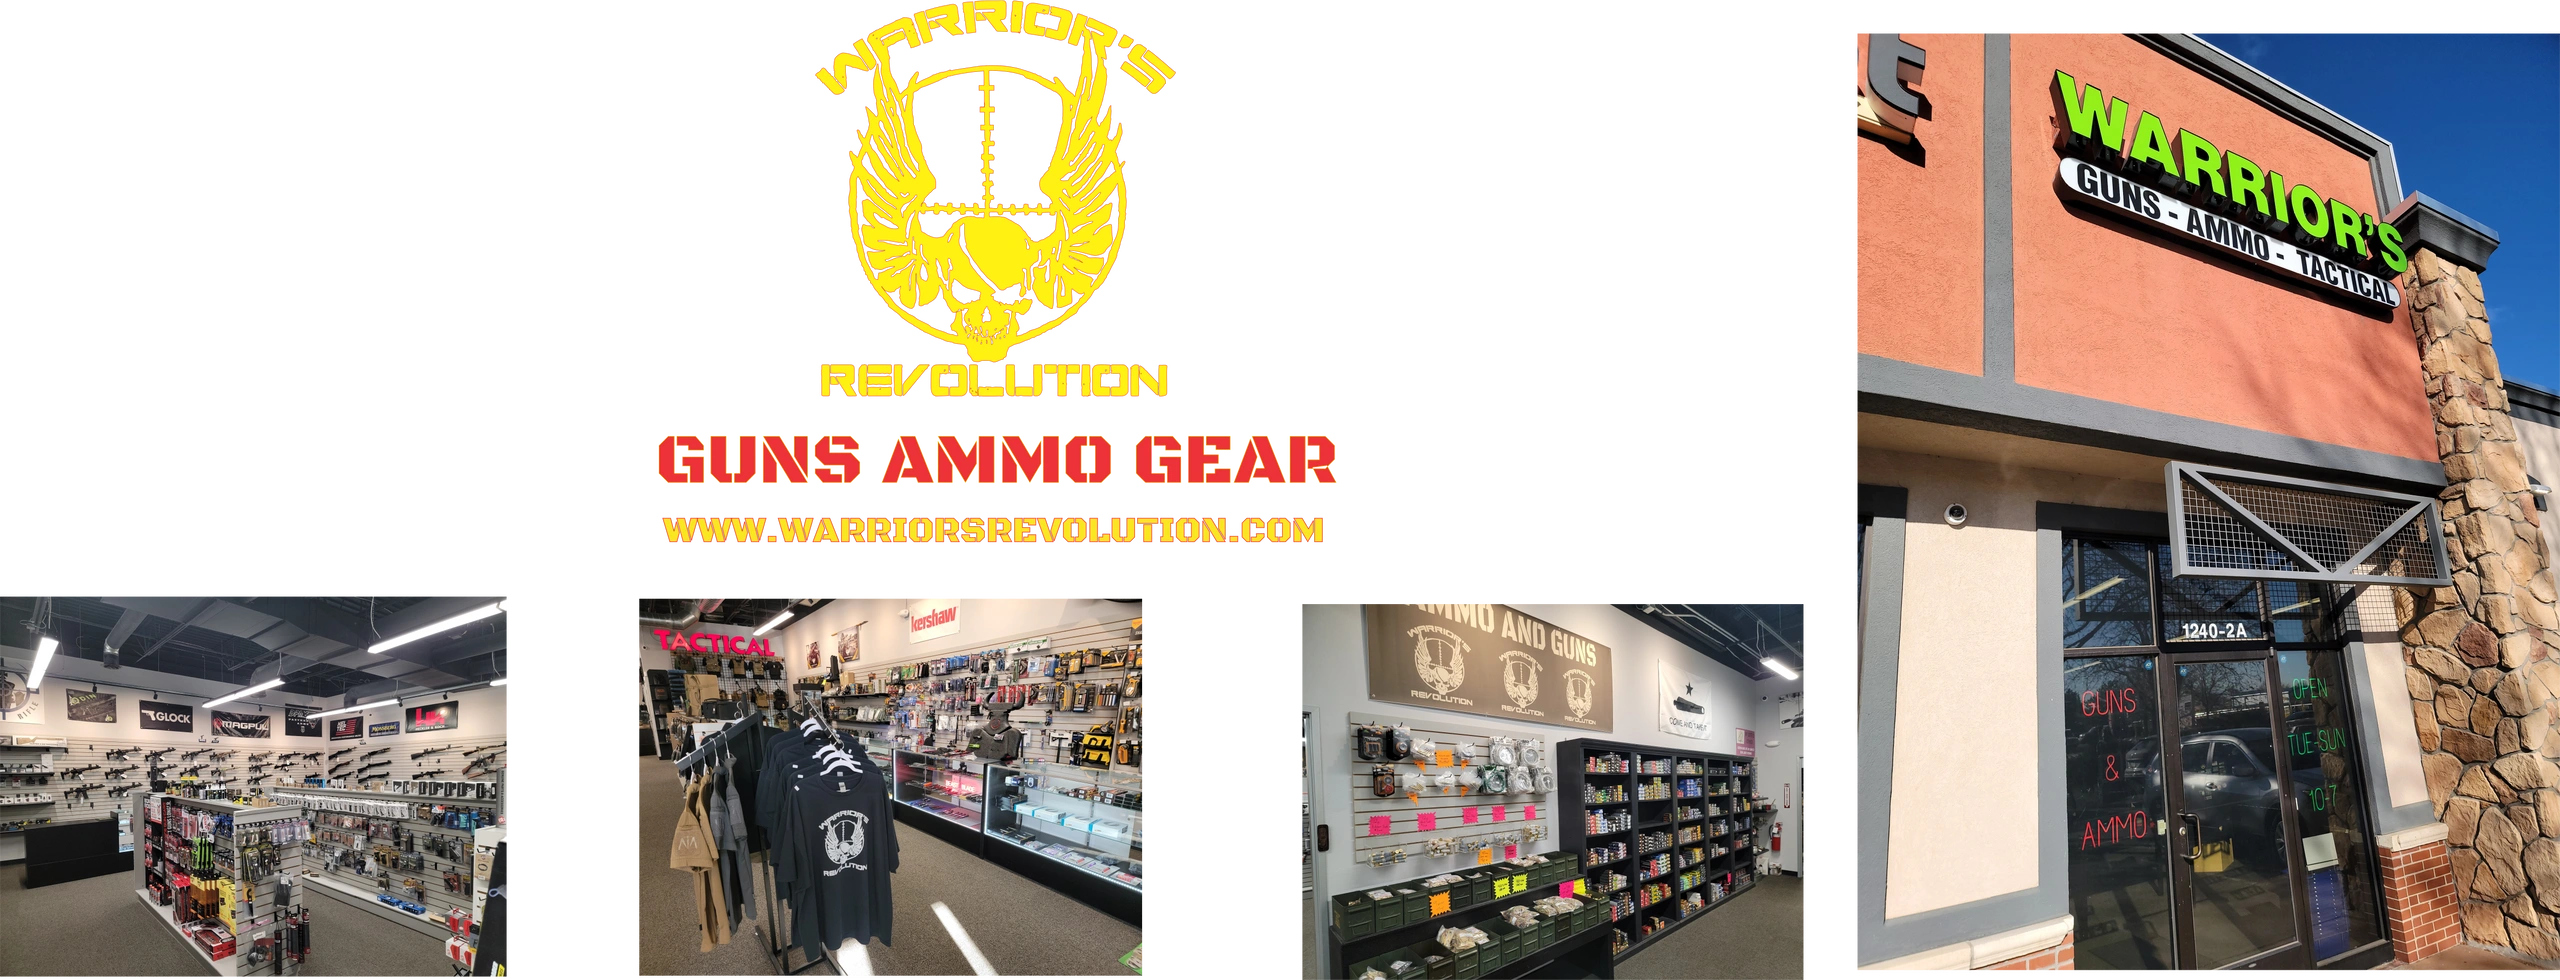 Warrior's Revolution, bulk ammunition, guns, and tactical gear sales. Bulk ammunition always for sal